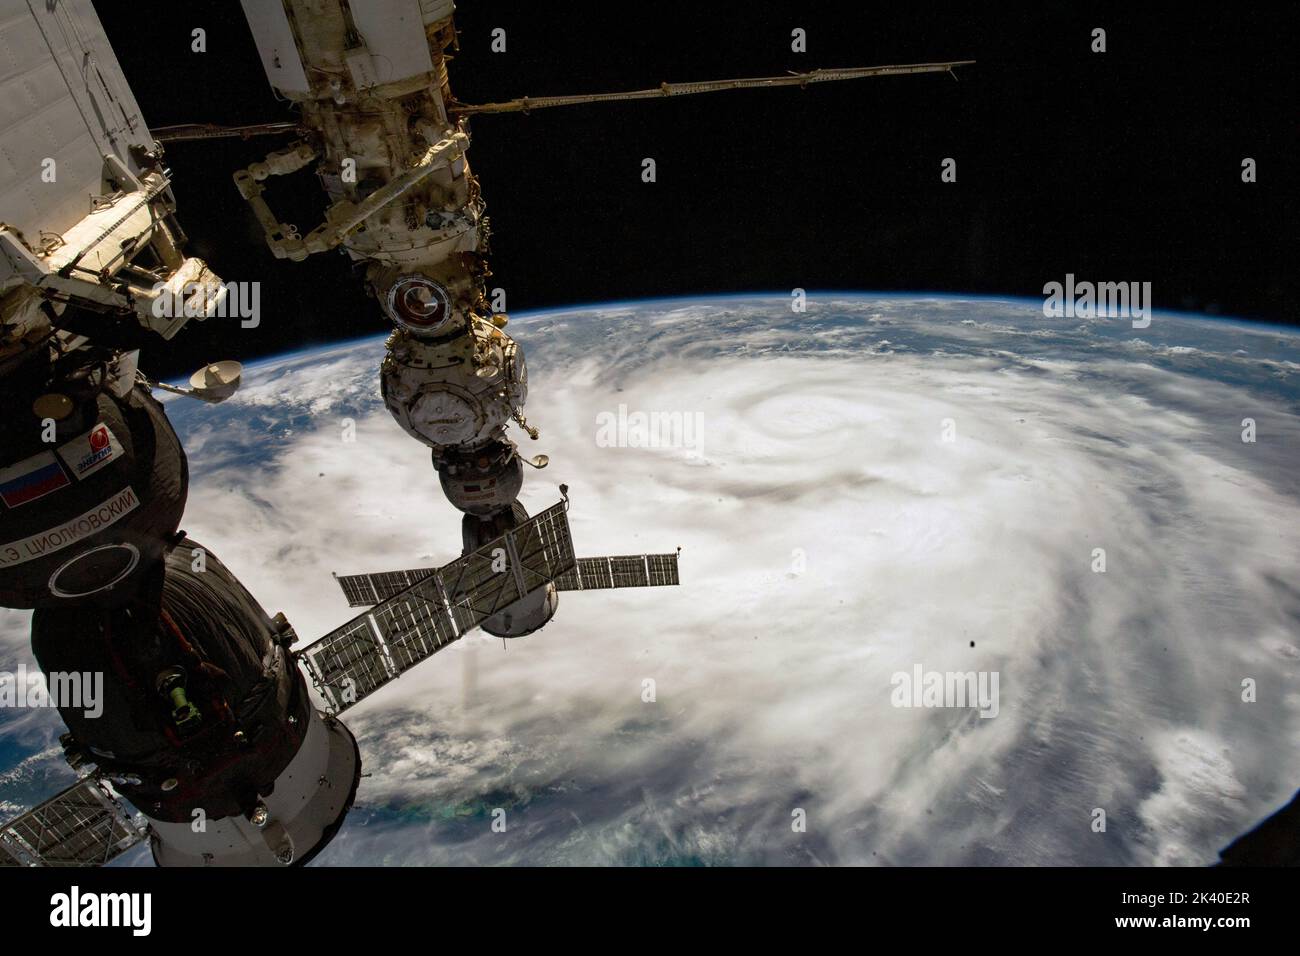 CARIBBEAN SEA - 26 September 2020 - An astronaut on the International Space Station took this dramatic image of Hurricane Ian heading towards the coas Stock Photo